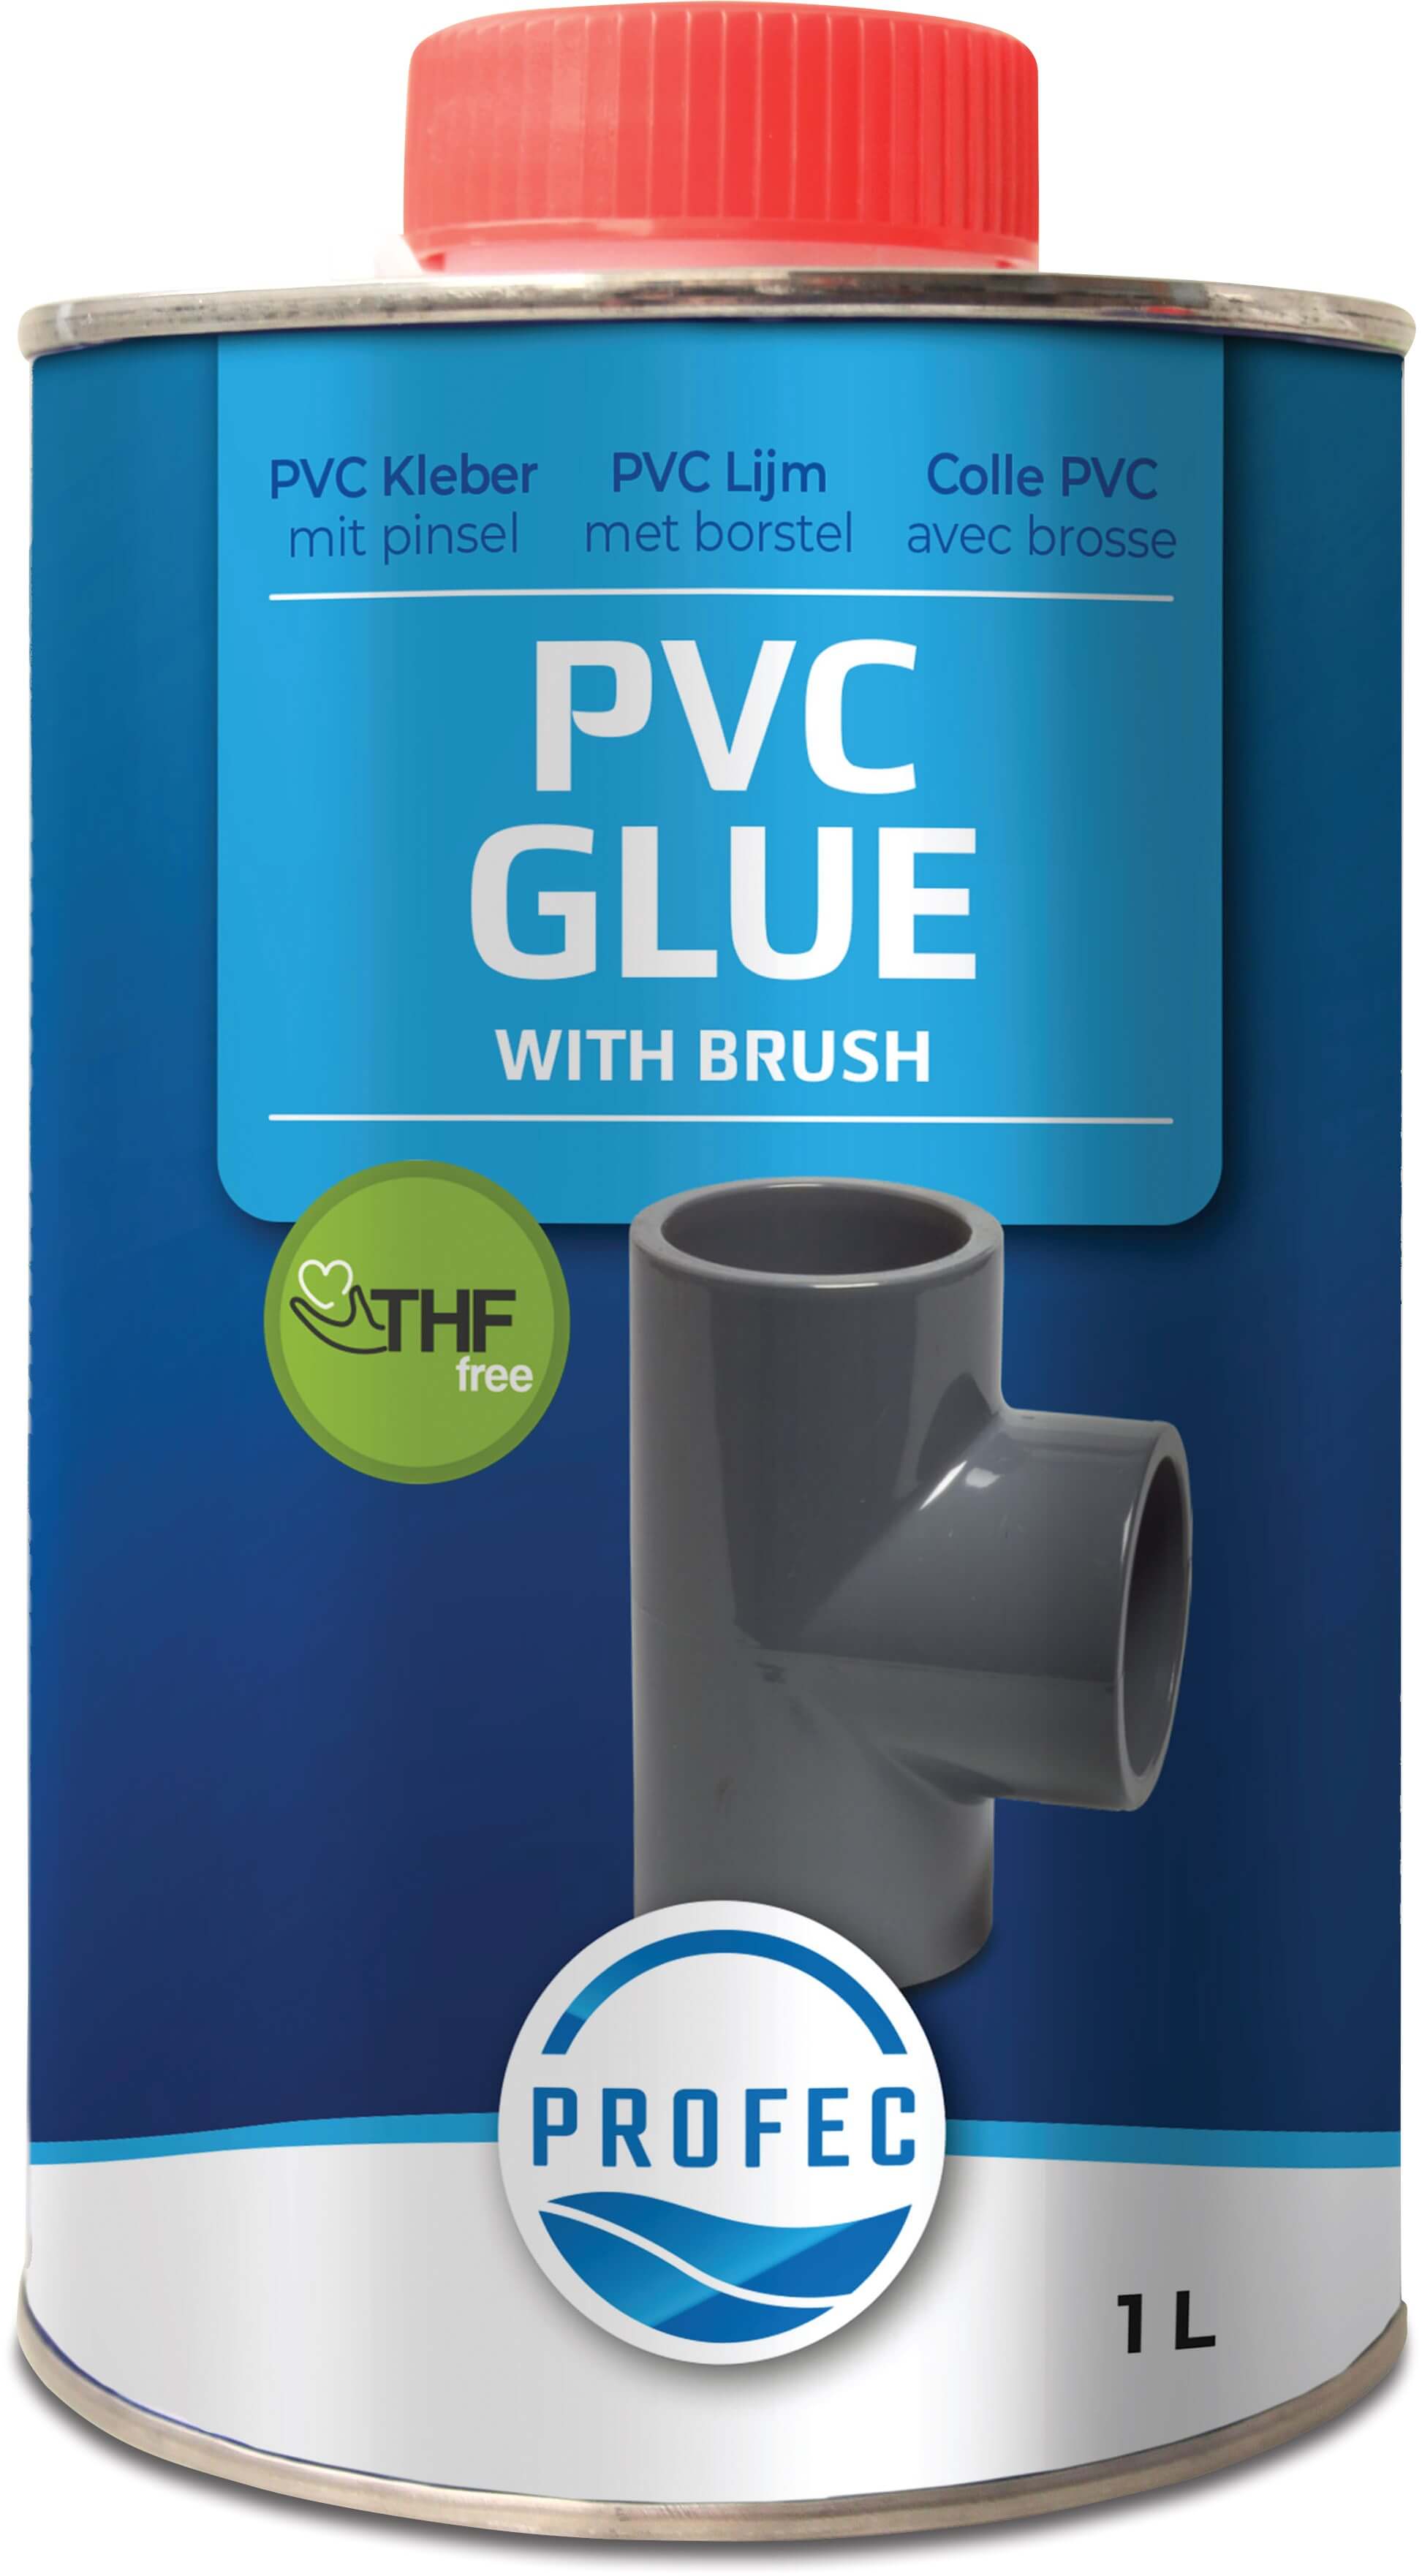 Profec PVC glue 1ltr with brush type THF free label EN/DE/NL/FR